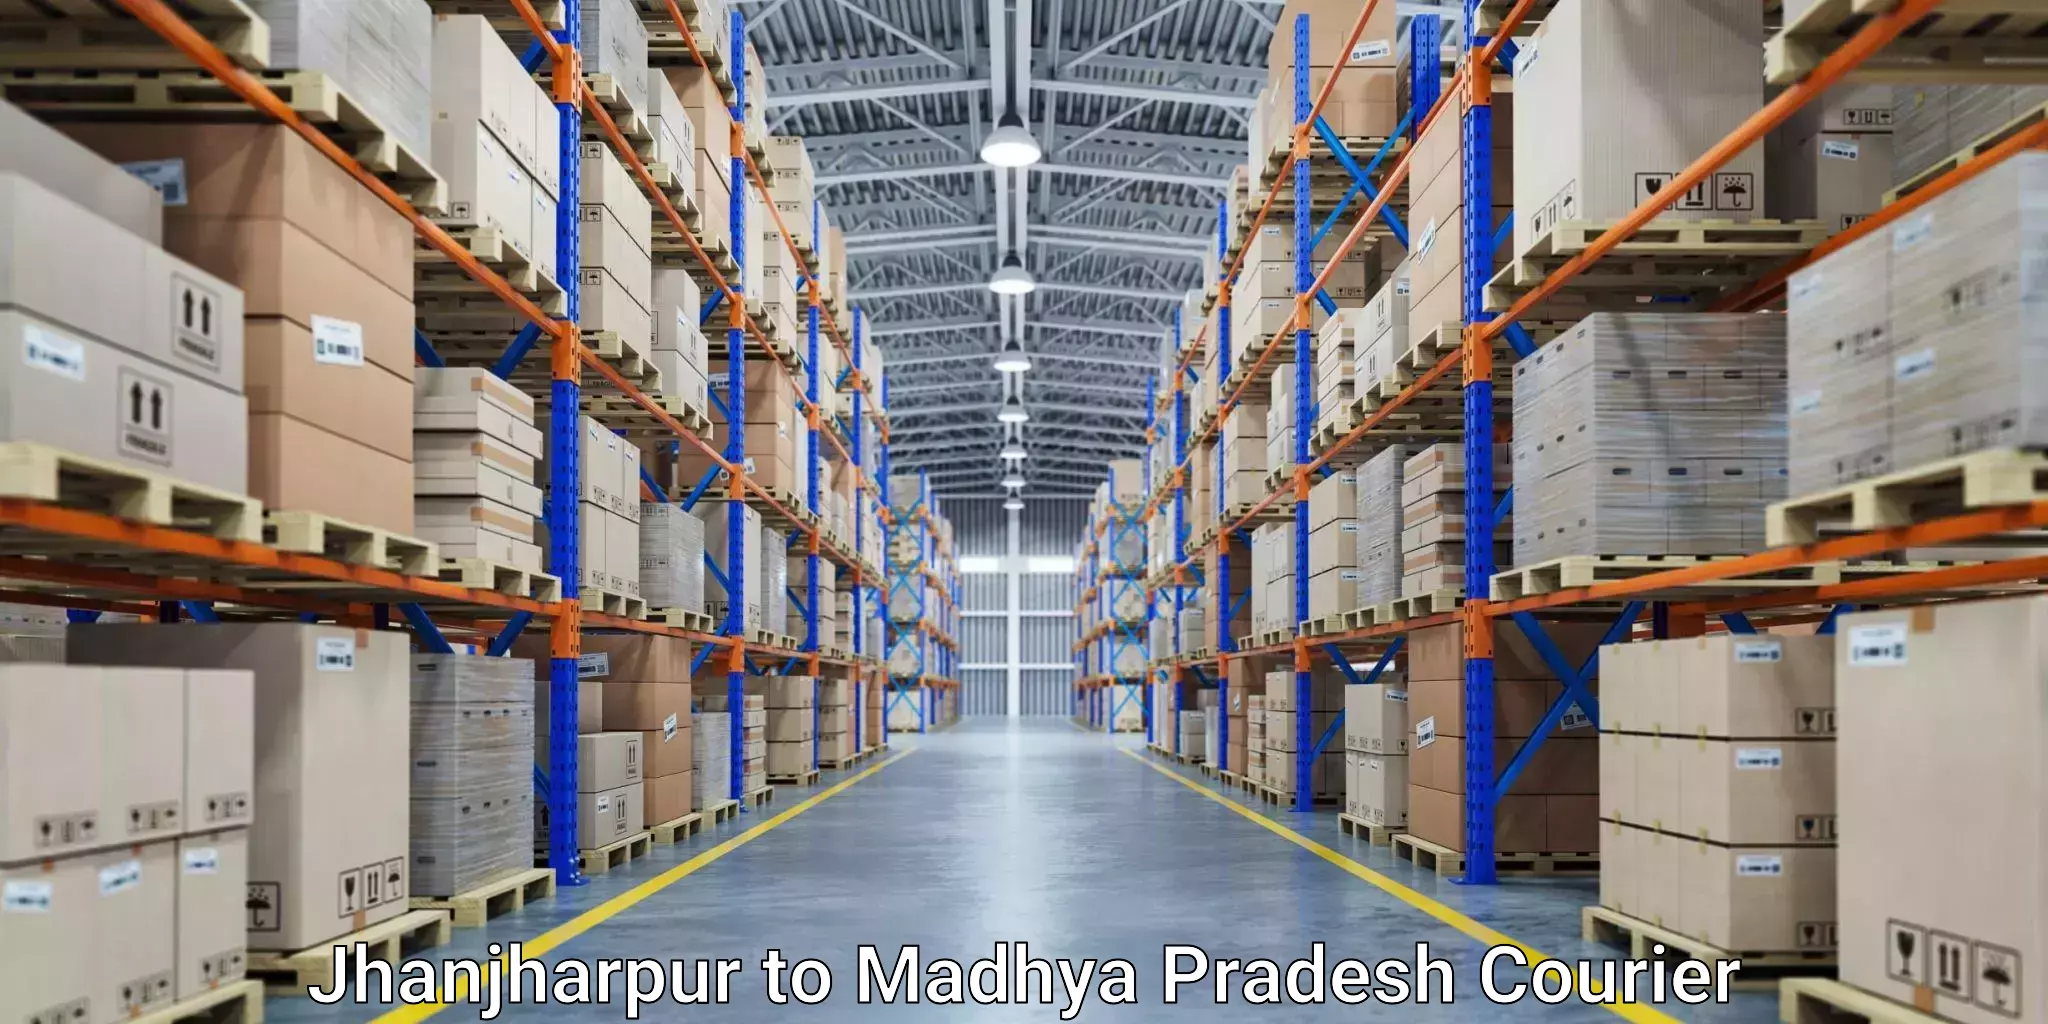 Courier service efficiency Jhanjharpur to Jirapur